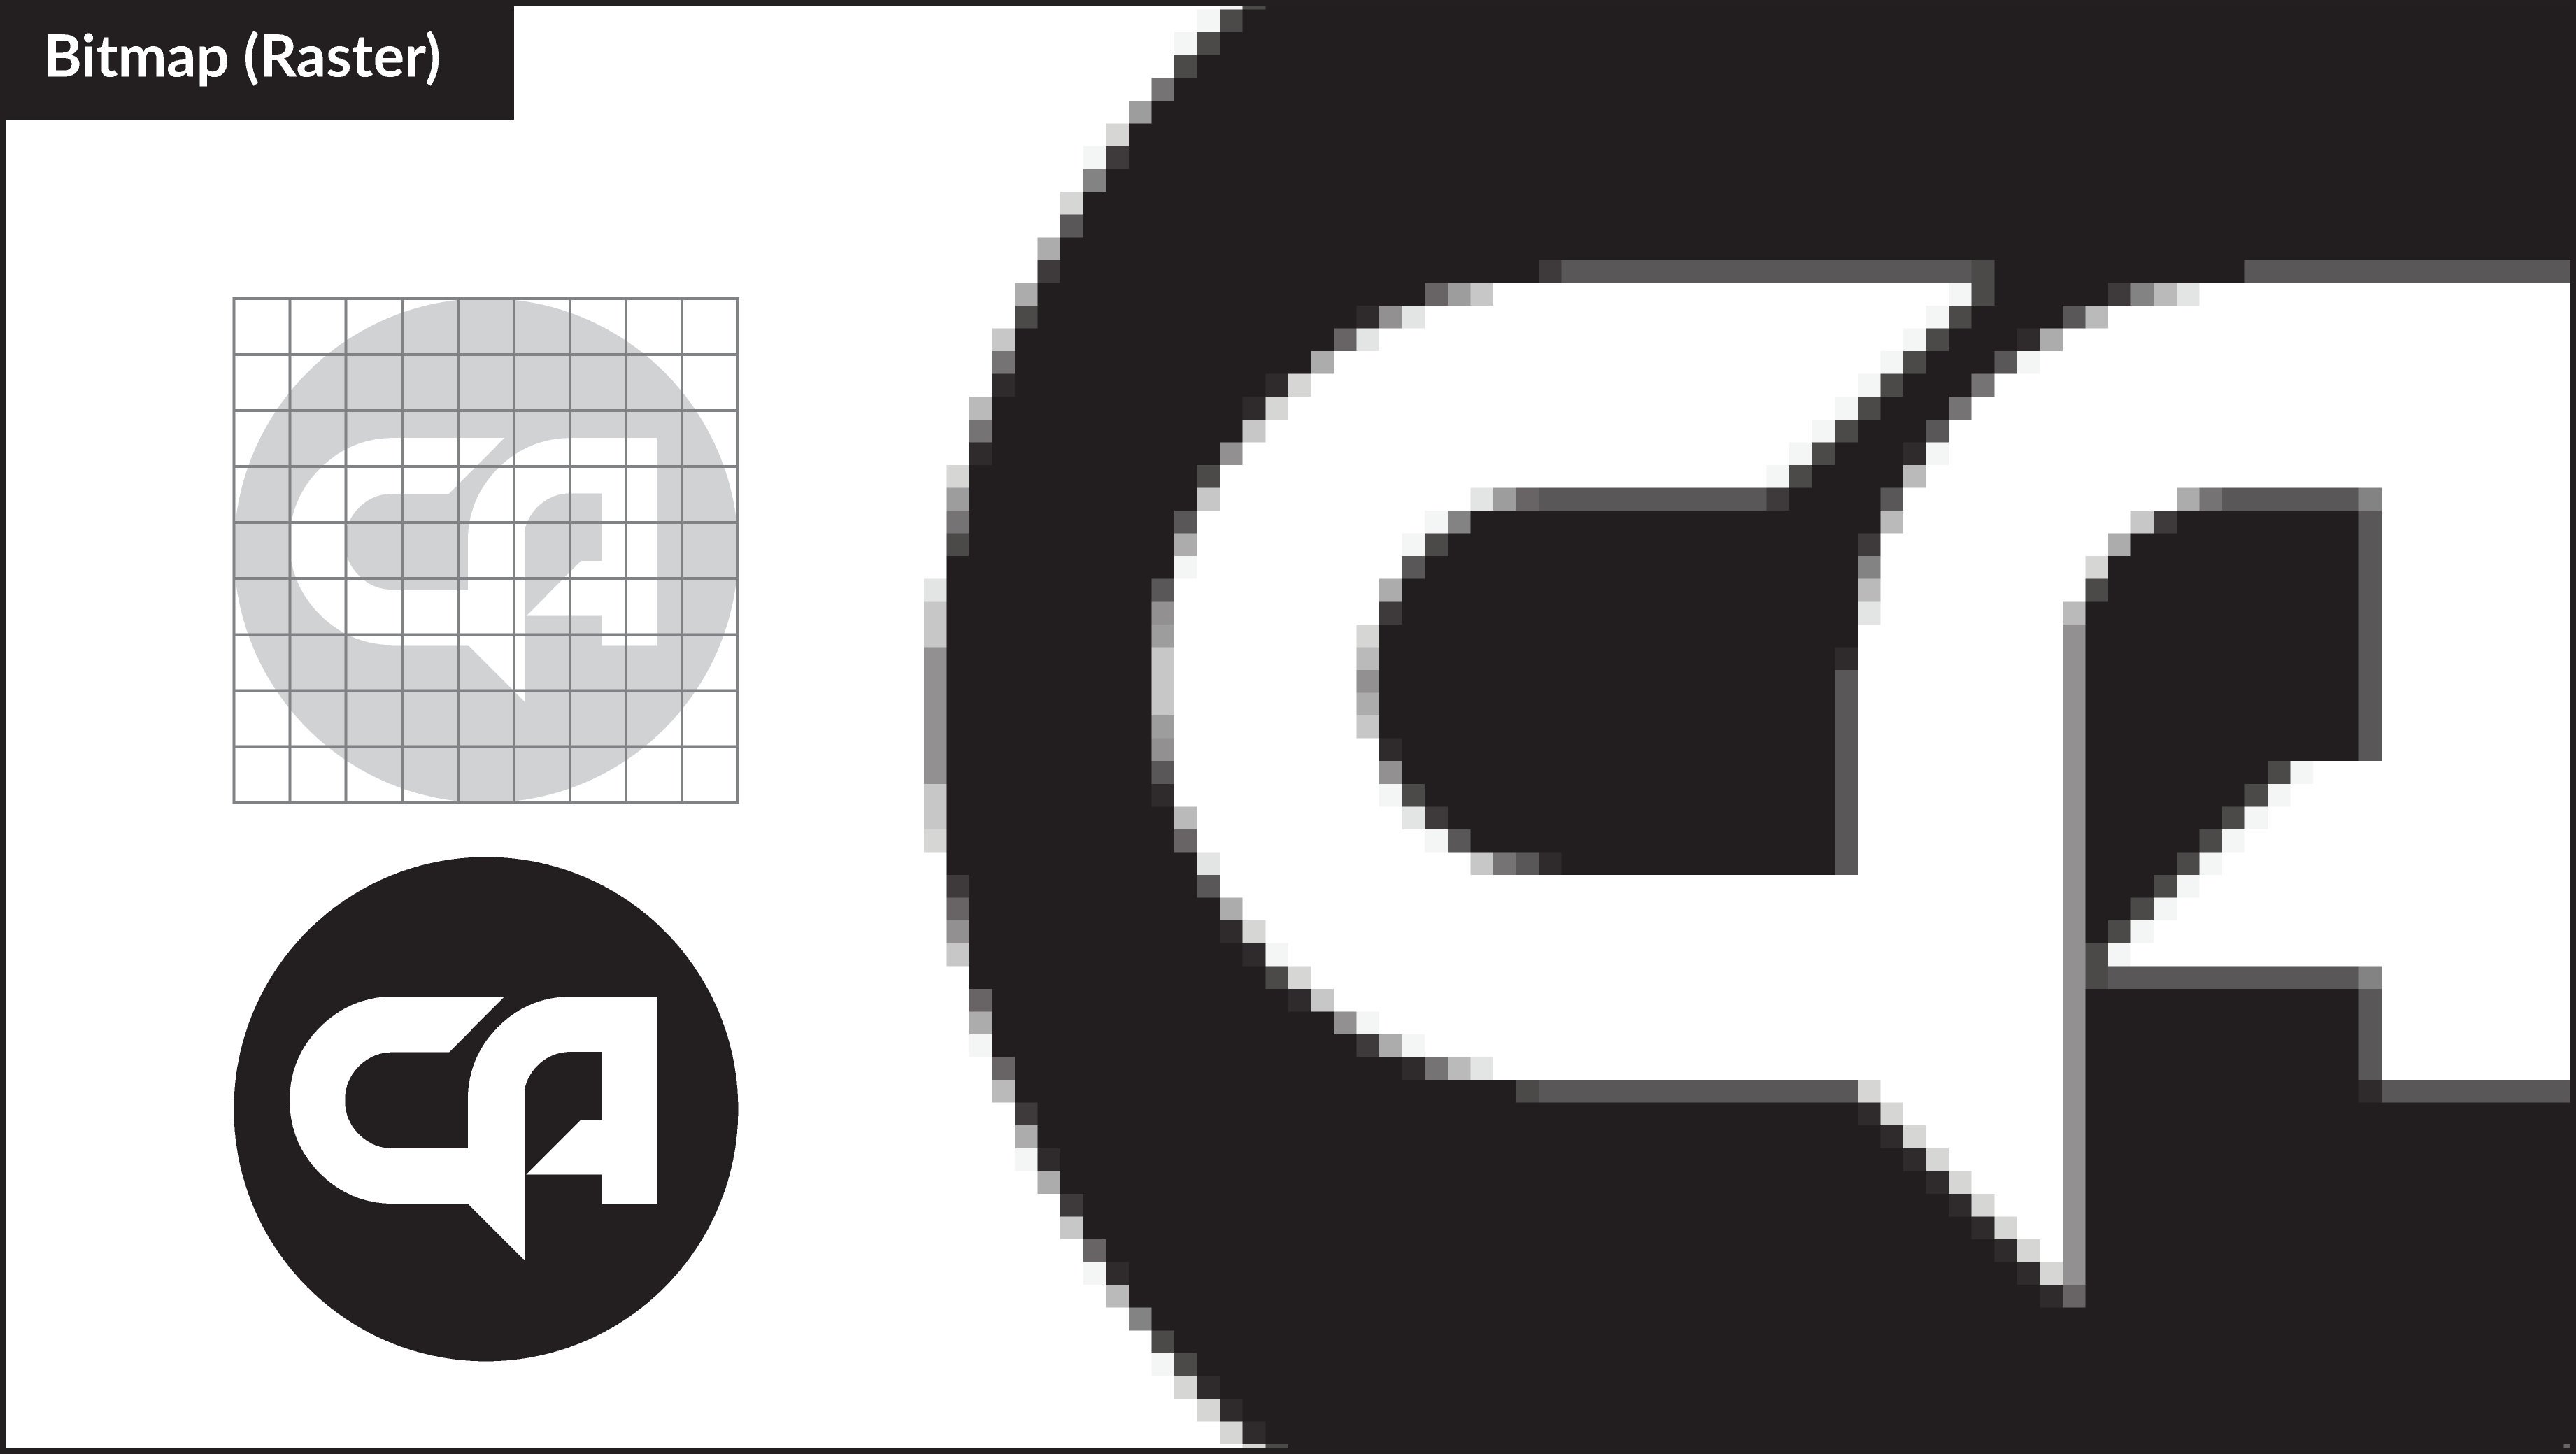 Bitmap CA logo